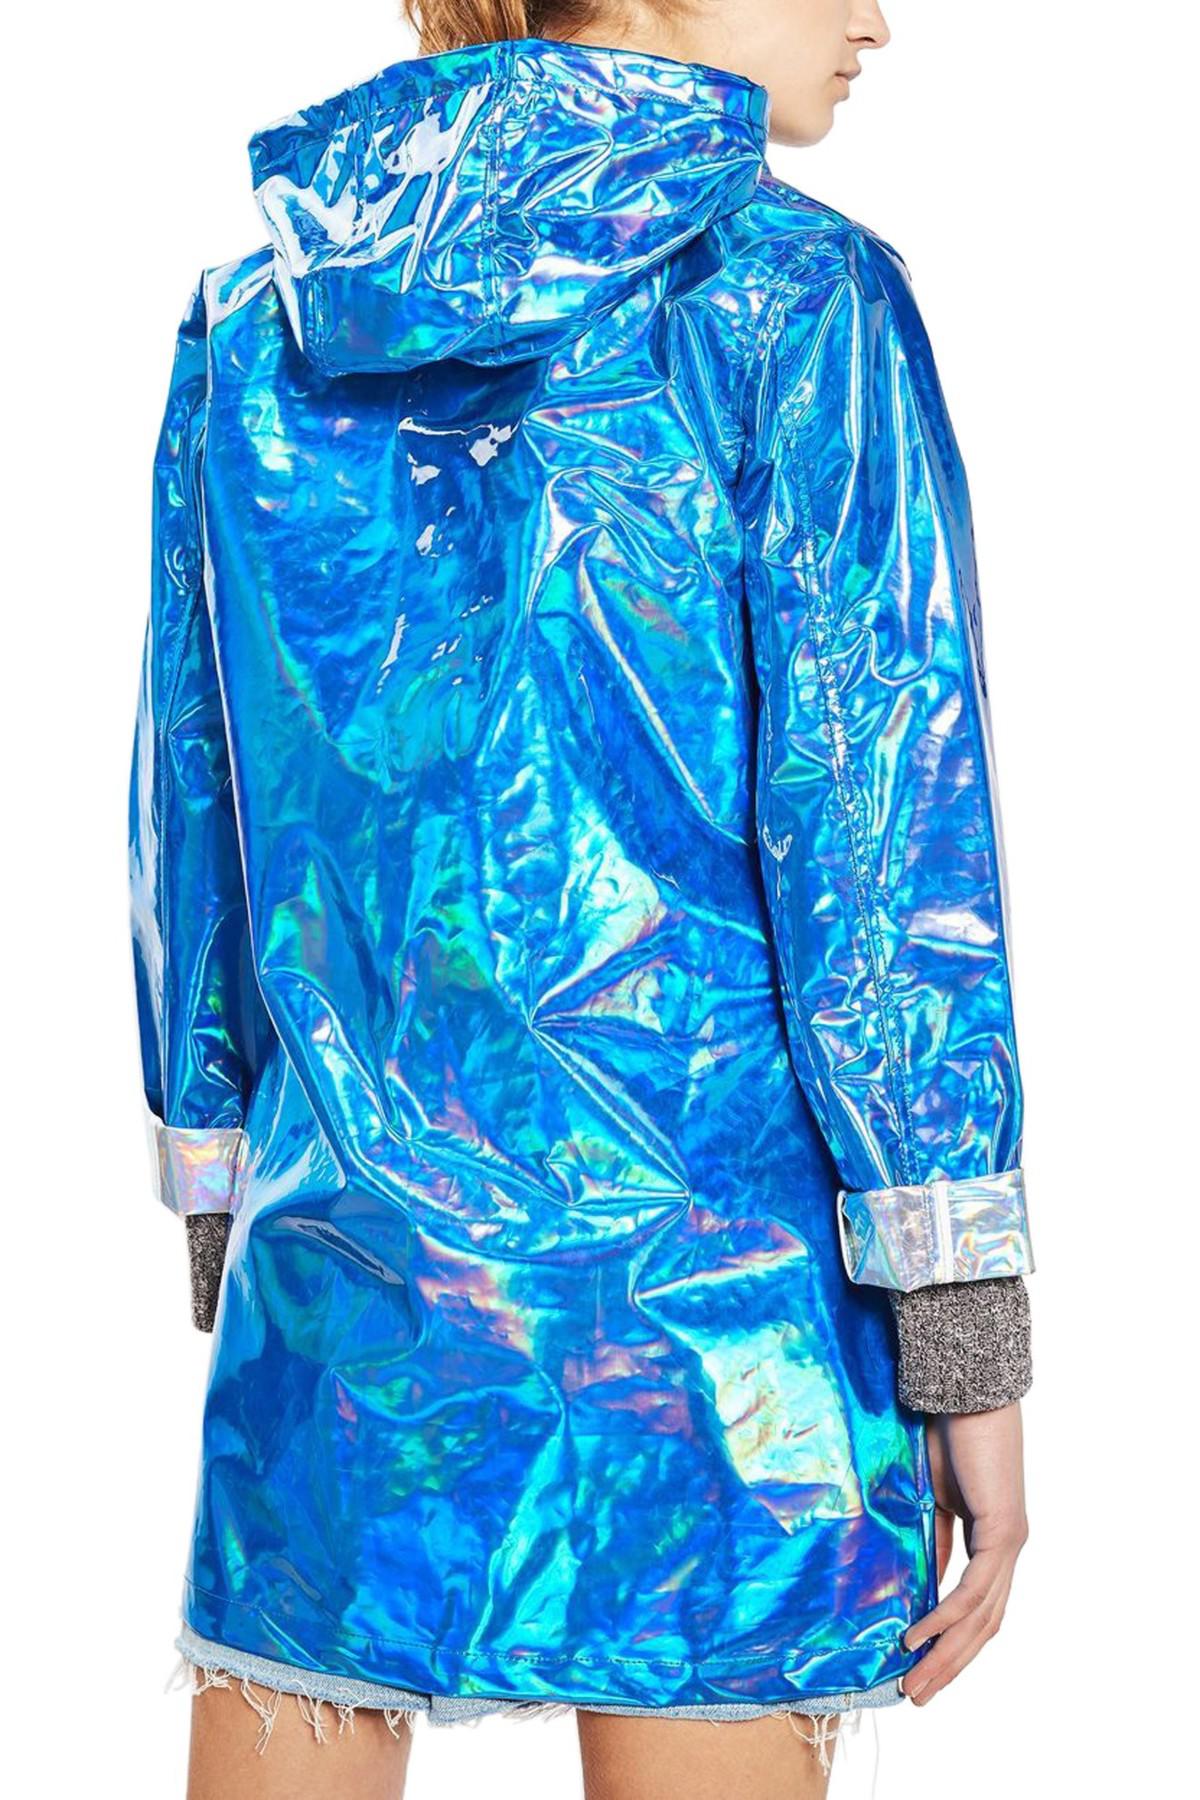 TOPSHOP Iridescent Rain Jacket in Blue - Lyst